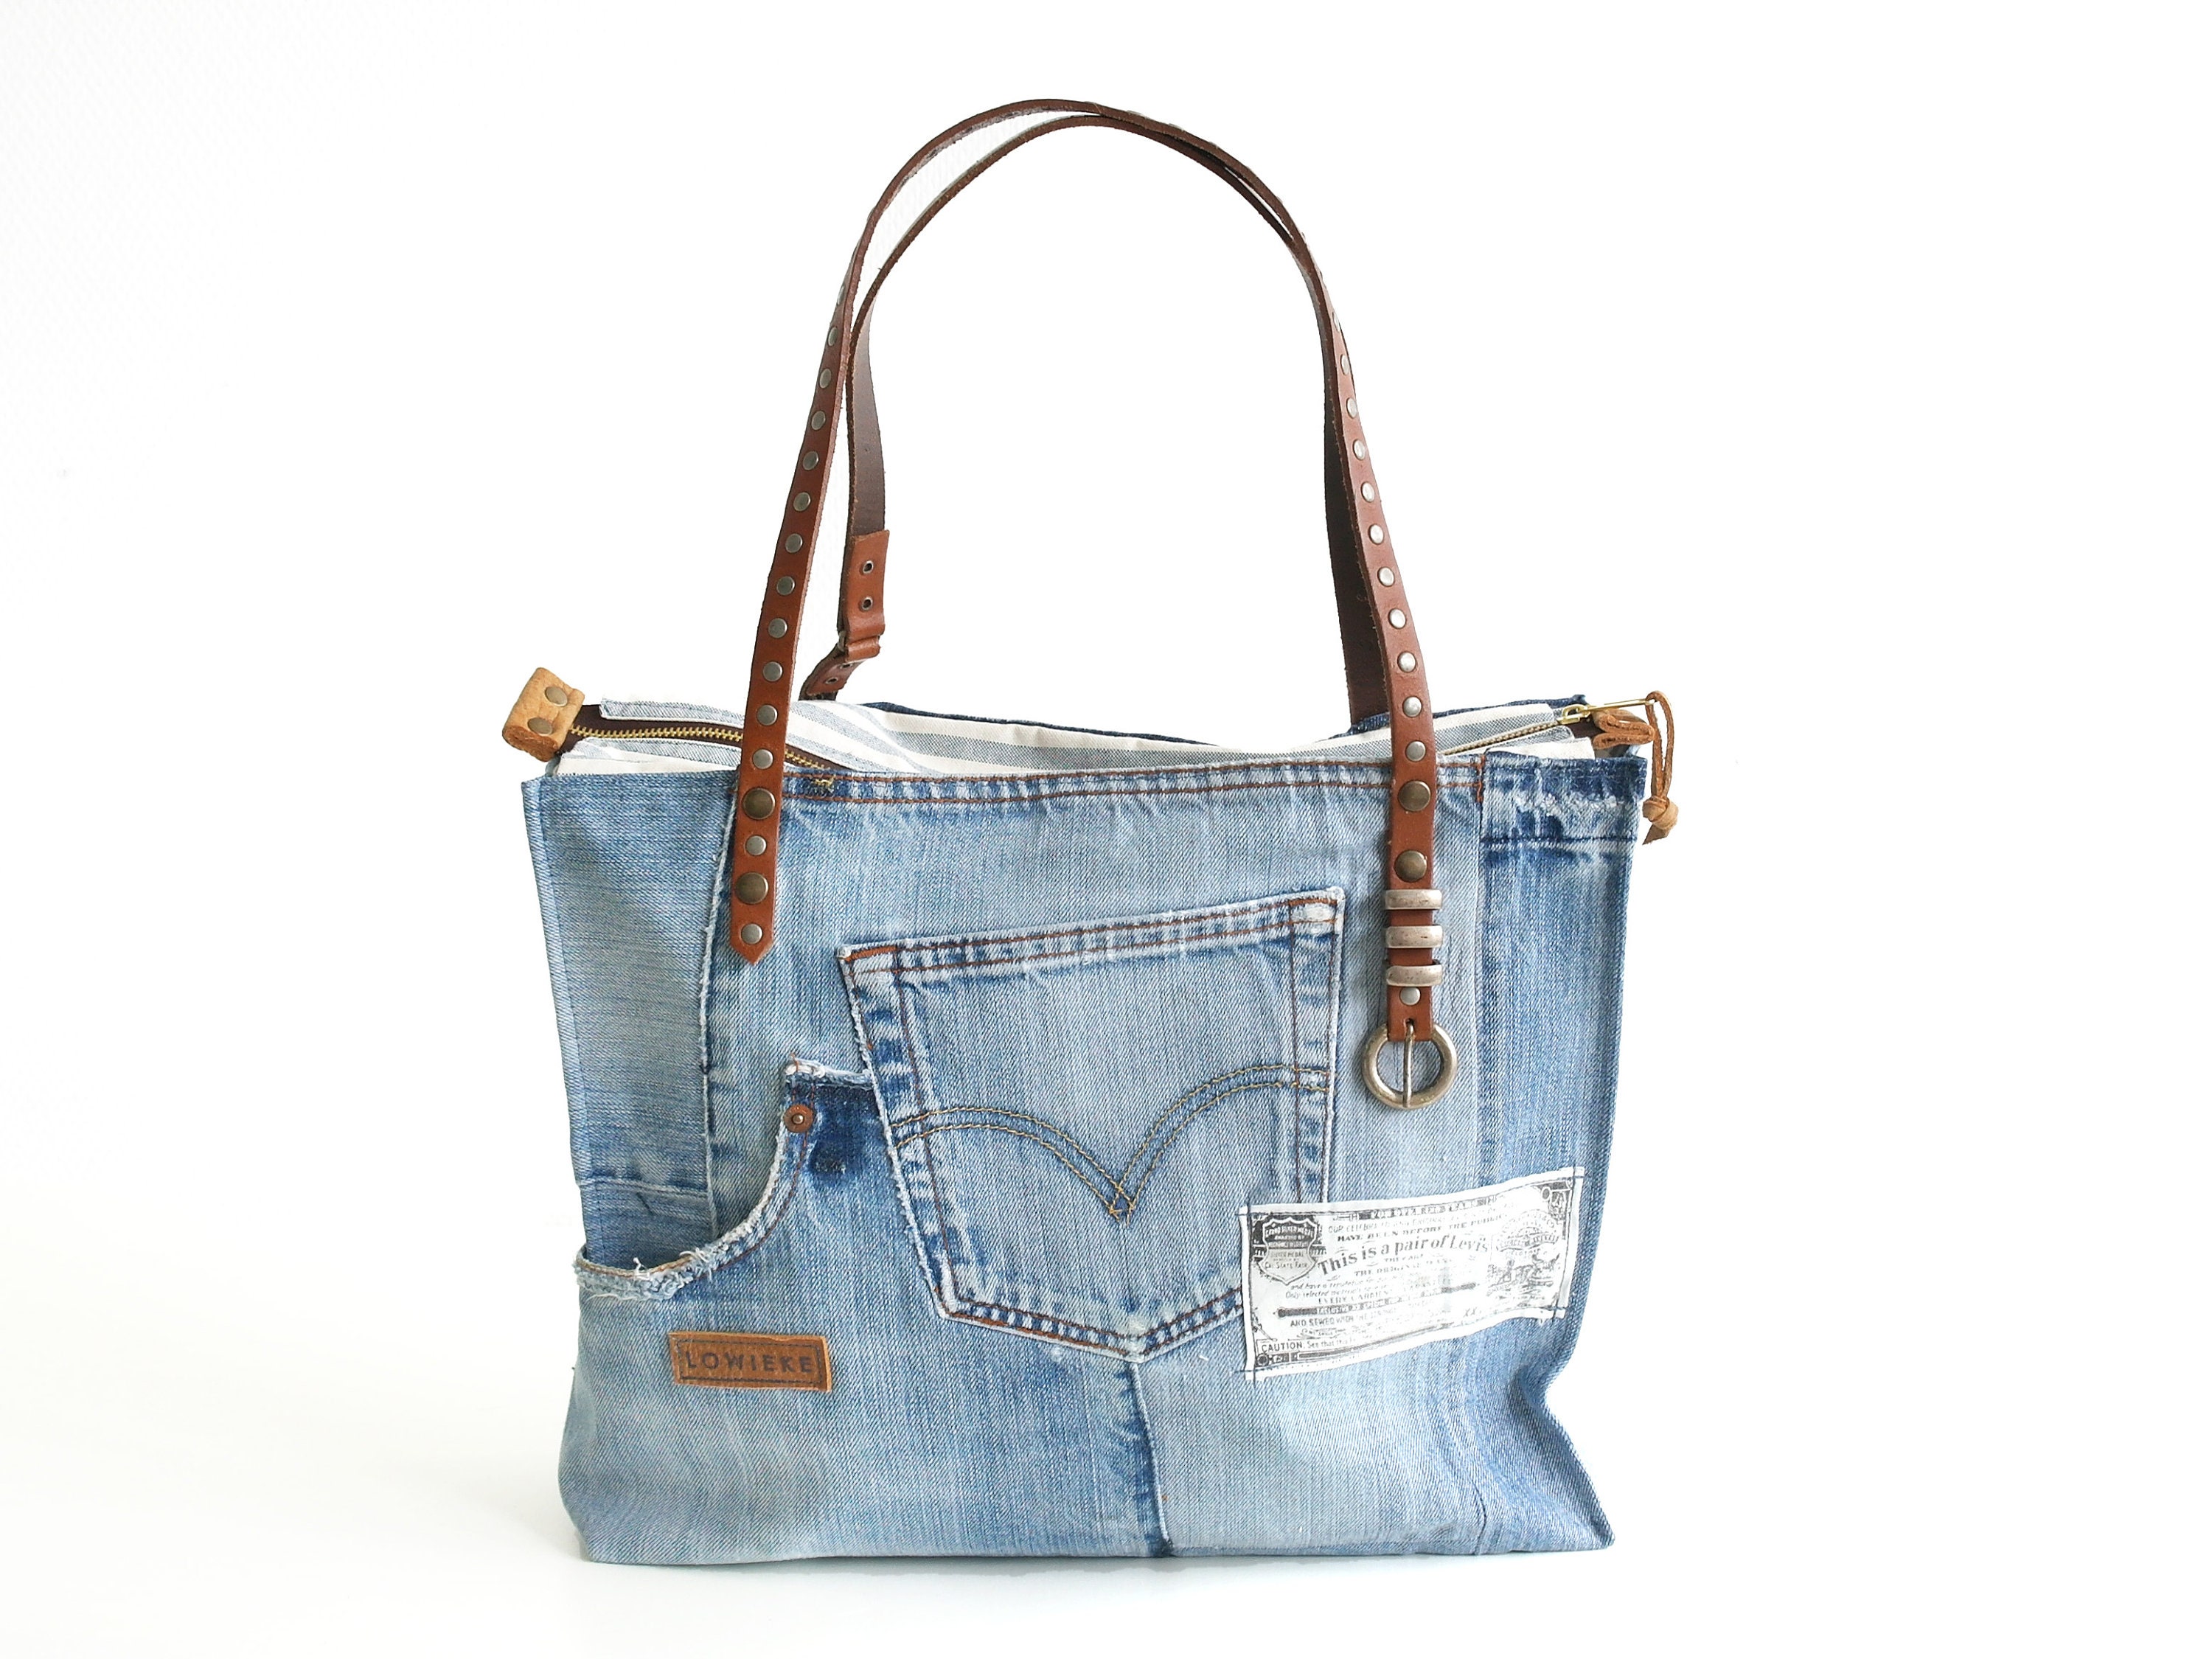 Buy Upcycled Denim Bag, Recycled Jeans Shoulder Bag, Patchwork Denim Tote,  Repurposed Blue Denim Handbag Online in India - Etsy